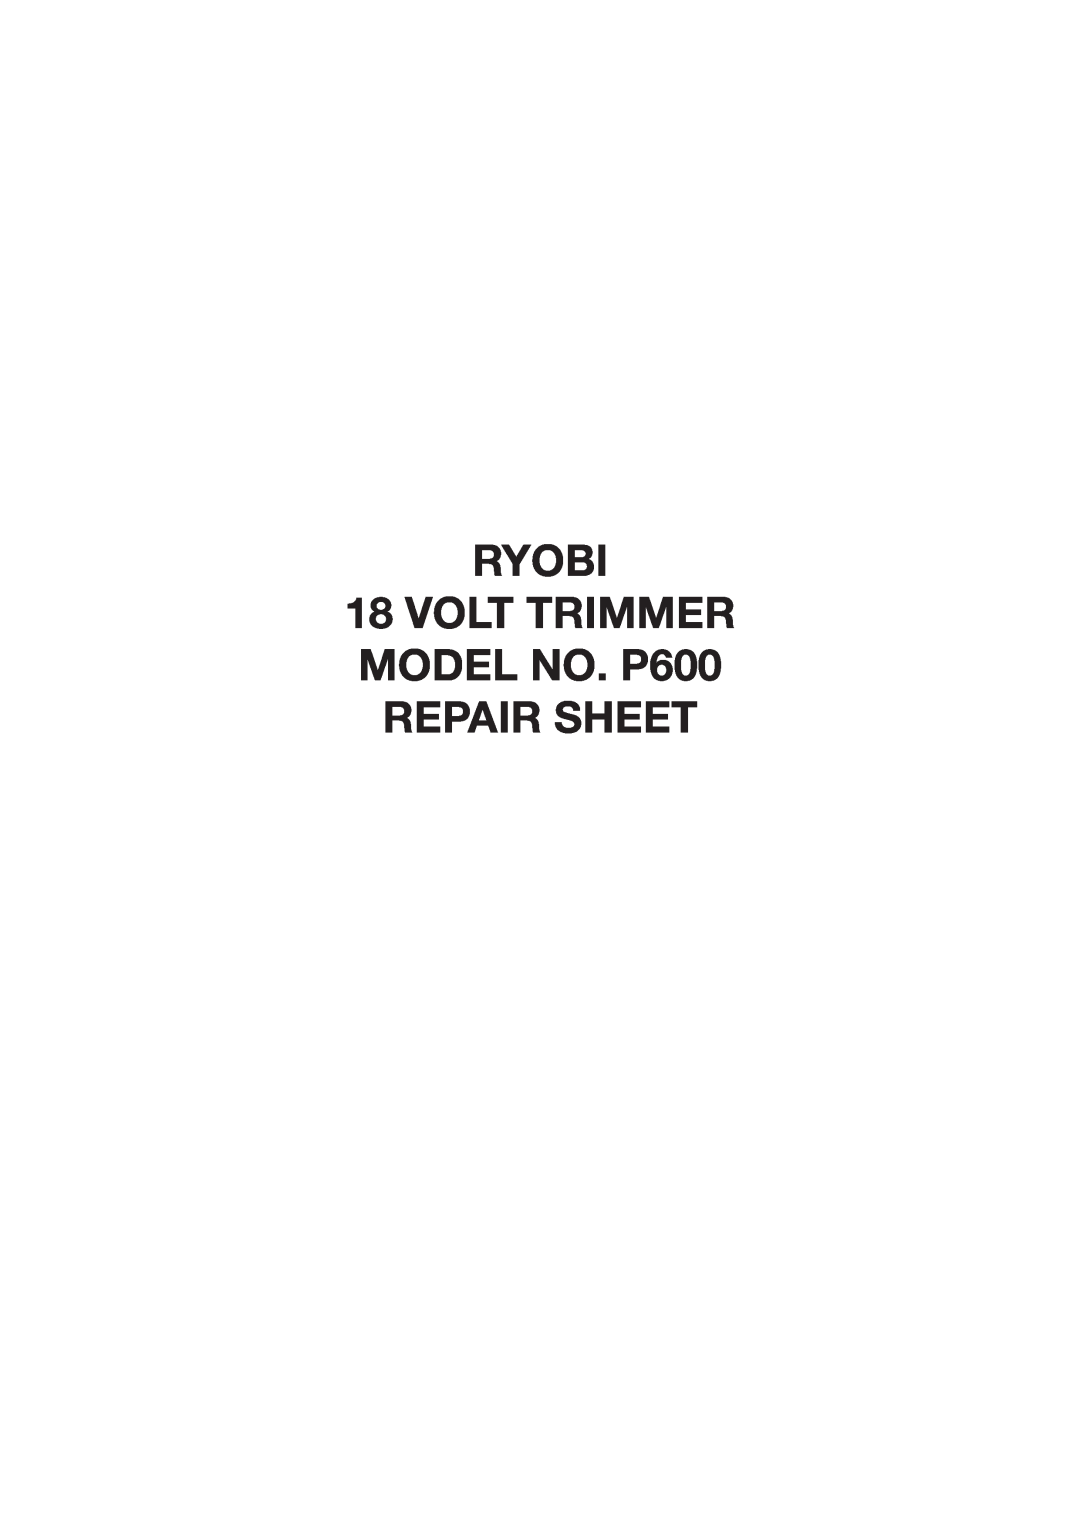 Ryobi manual RYOBI 18 VOLT TRIMMER MODEL NO. P600 REPAIR SHEET 